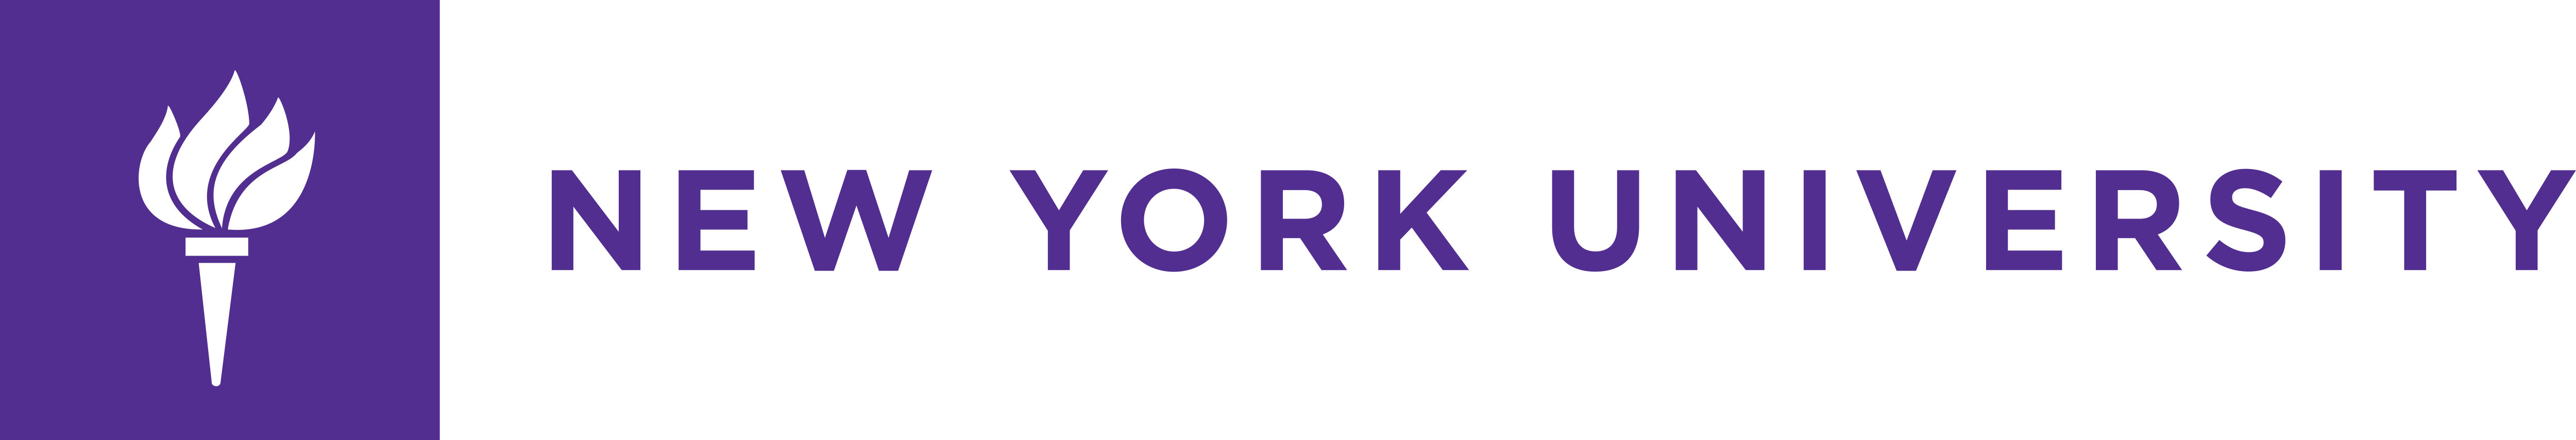 new-york-university-logos-download